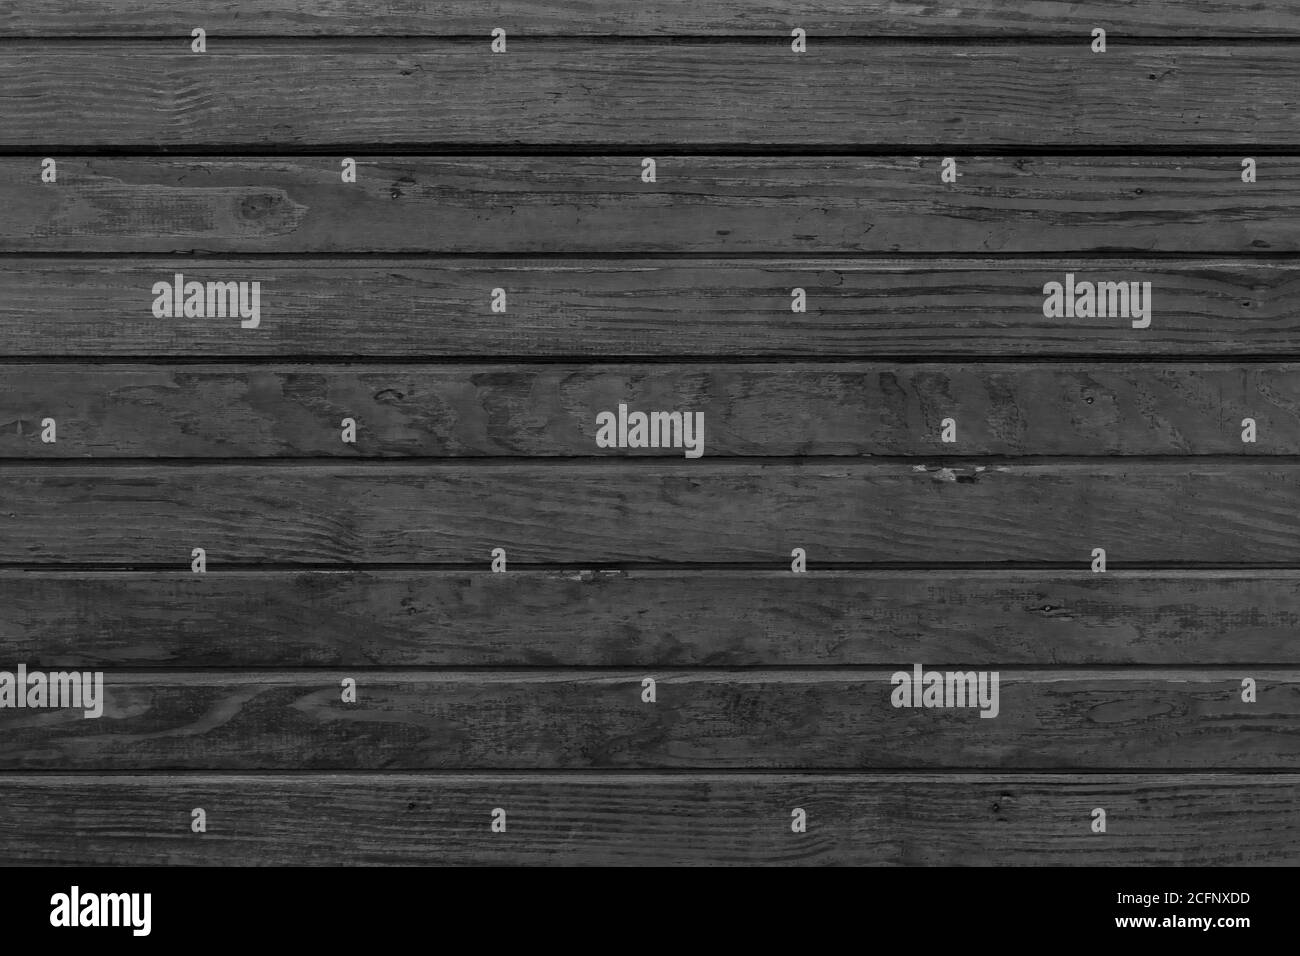 Horizontal black wood background. Old dark wooden background with black wood texture. Dark wood texture panel with horizontal planks. Stock Photo